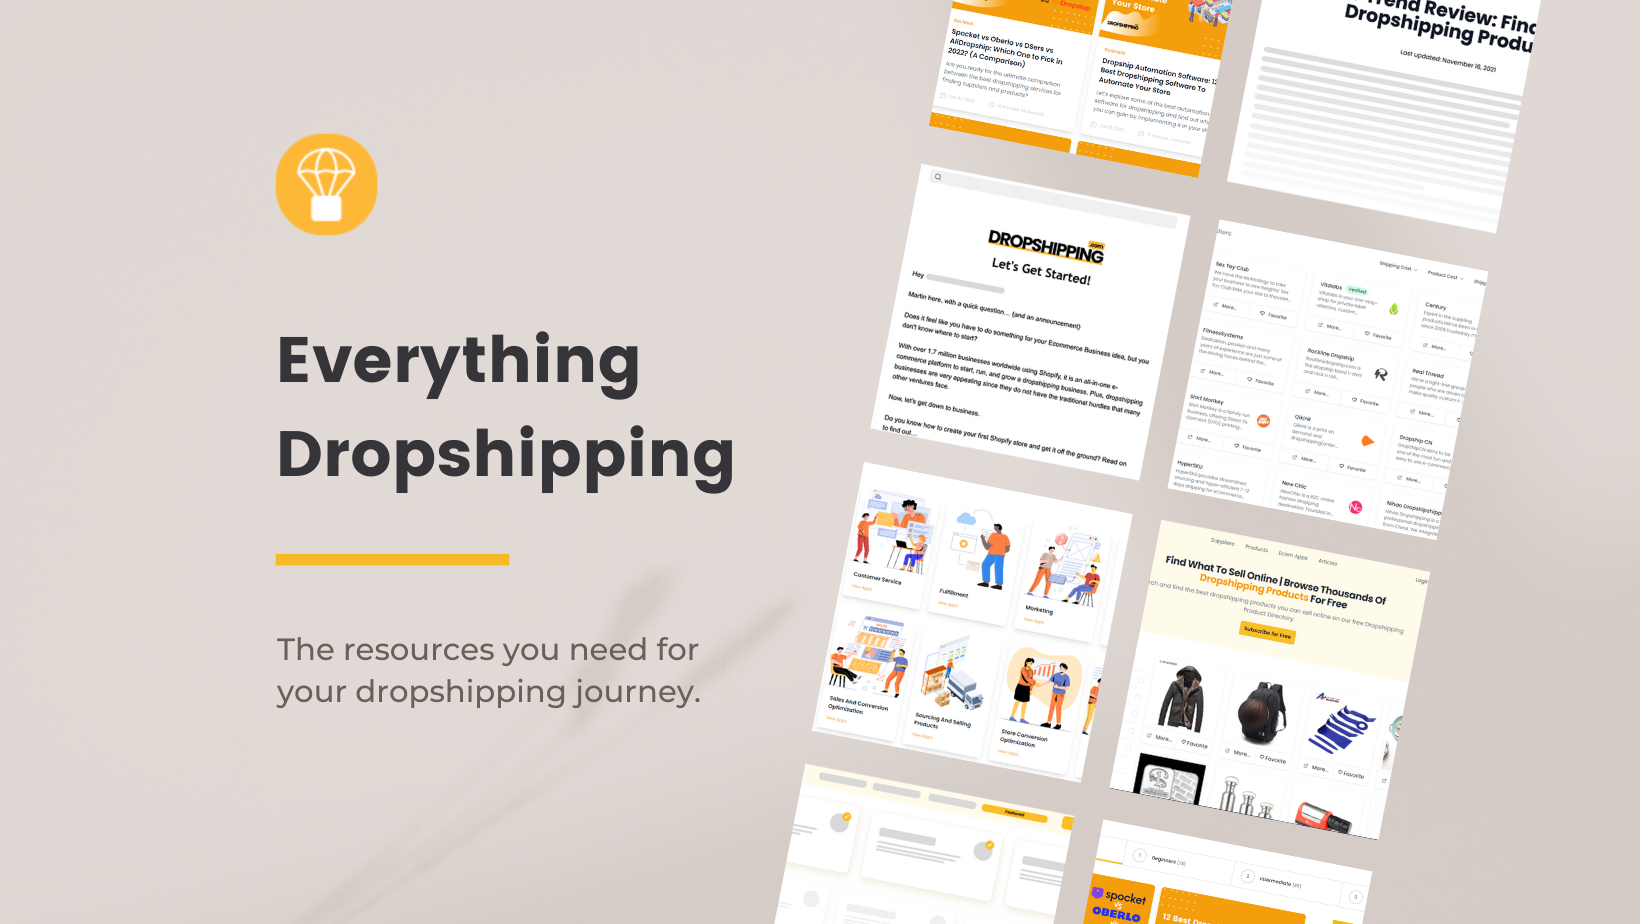 dropshipping.com advertising kit